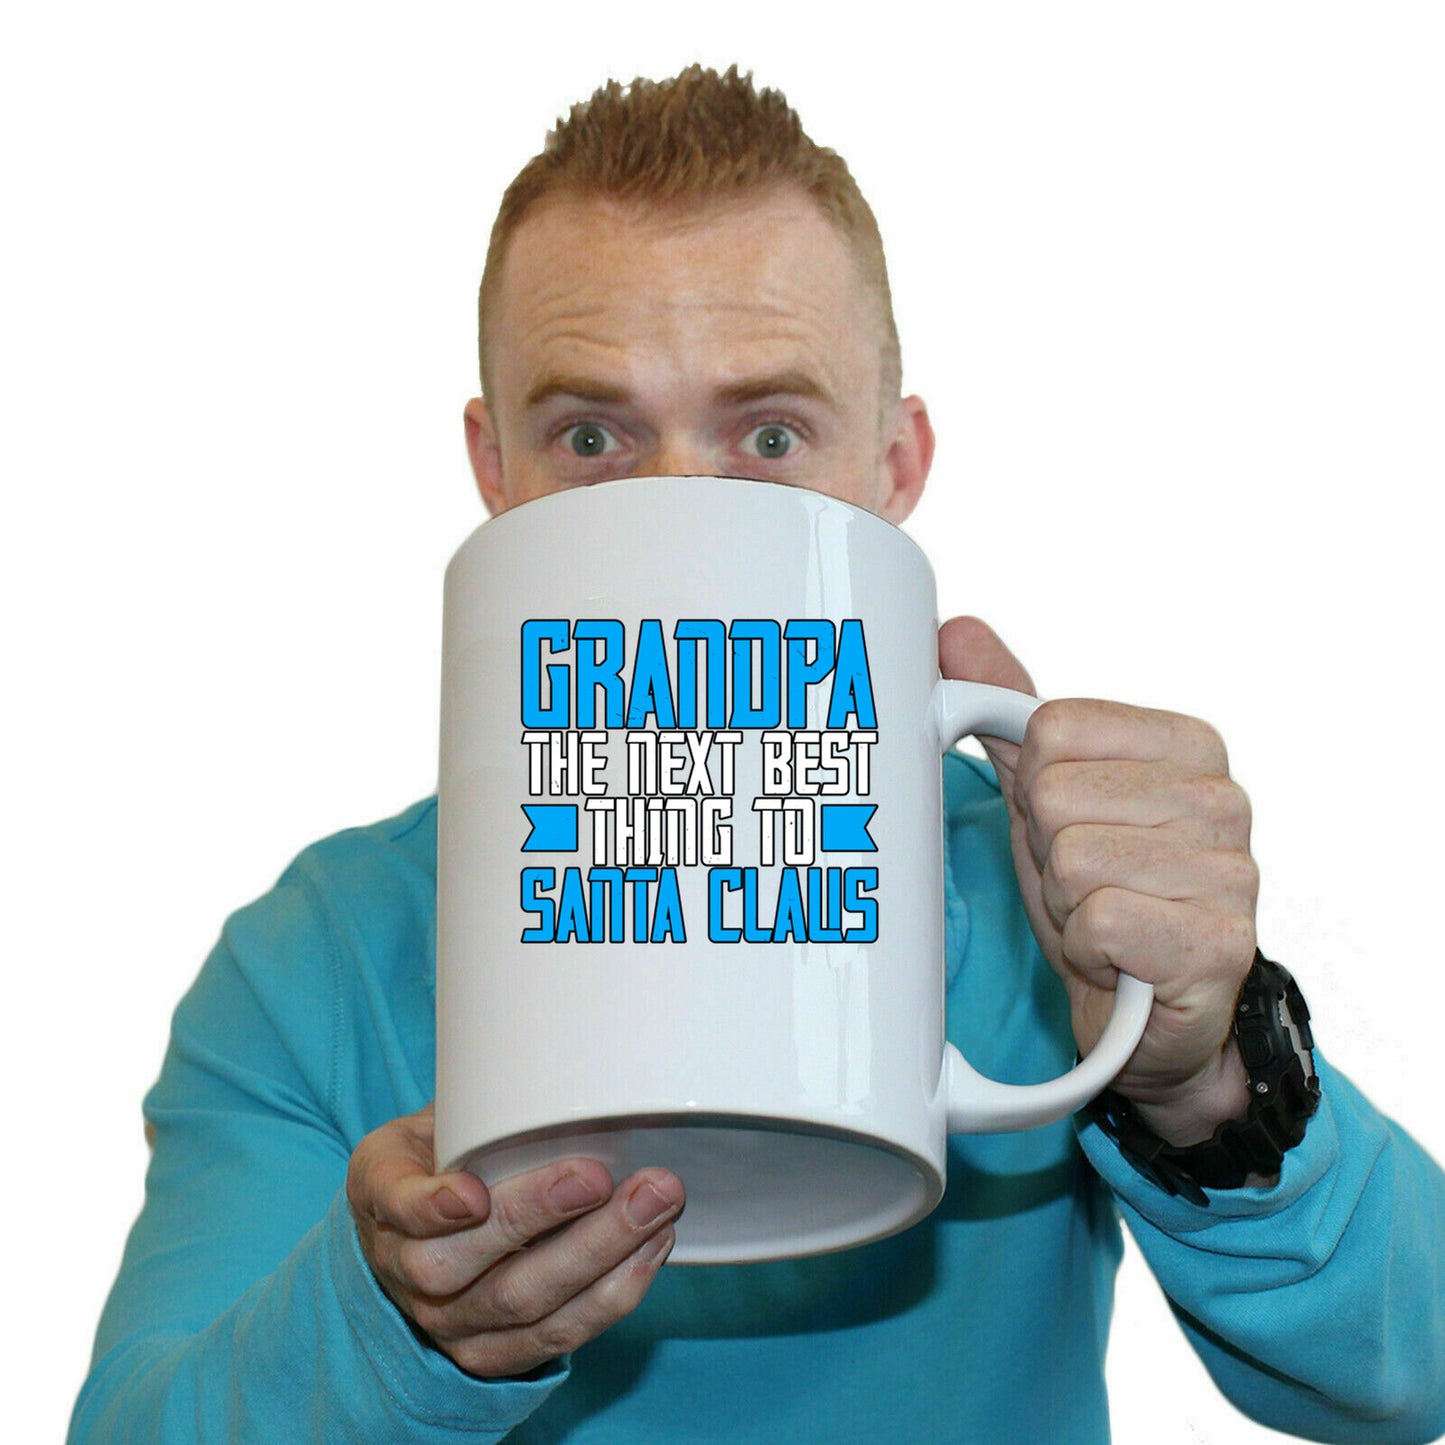 The Christmas Hub - Grandpa The Next Best Thing To Santa Claus - Funny Giant 2 Litre Mug